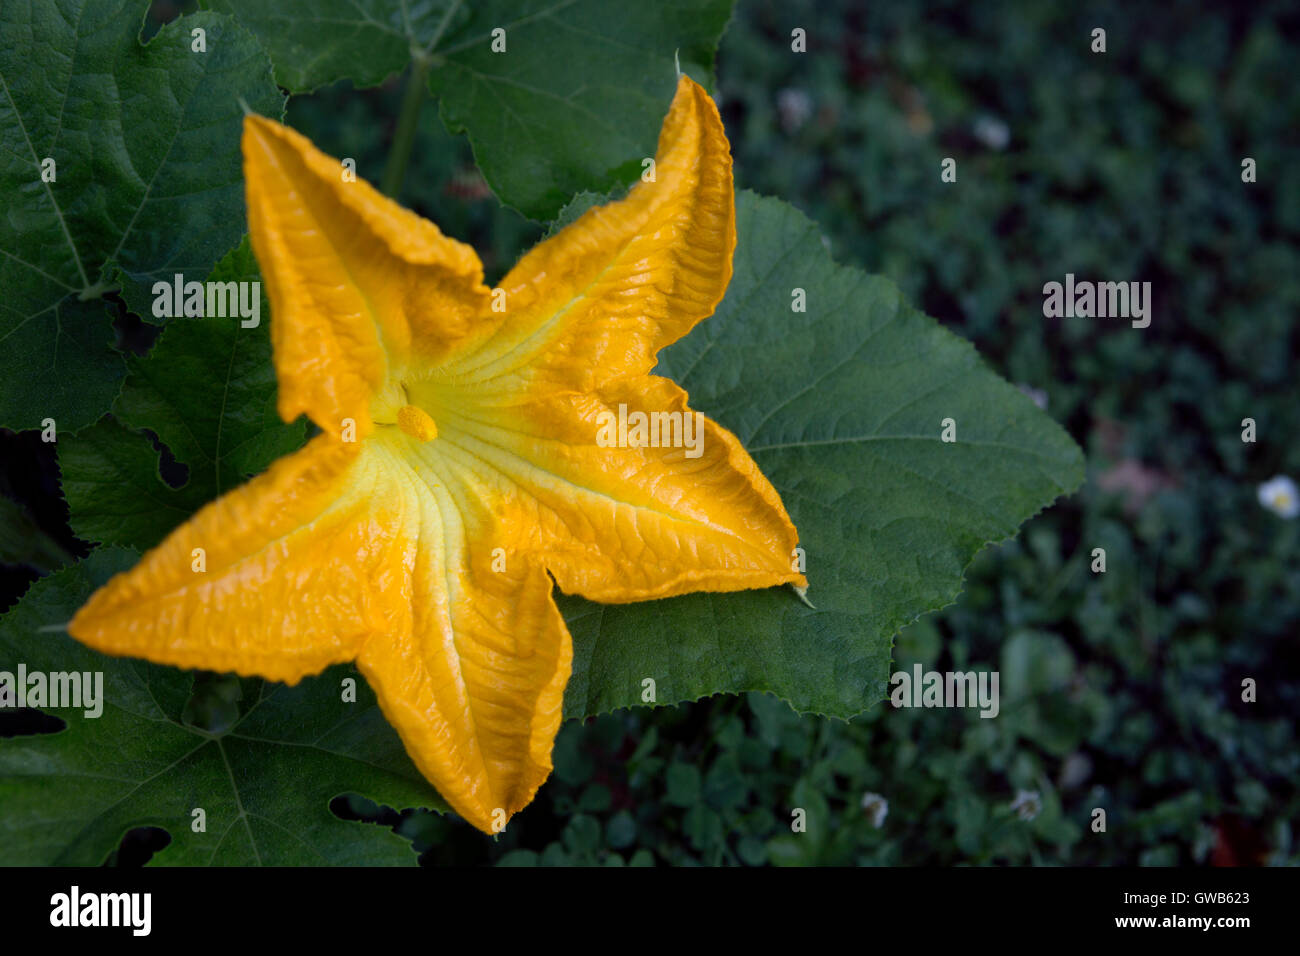 Male flower of a pumpkin plant in bloom Stock Photo